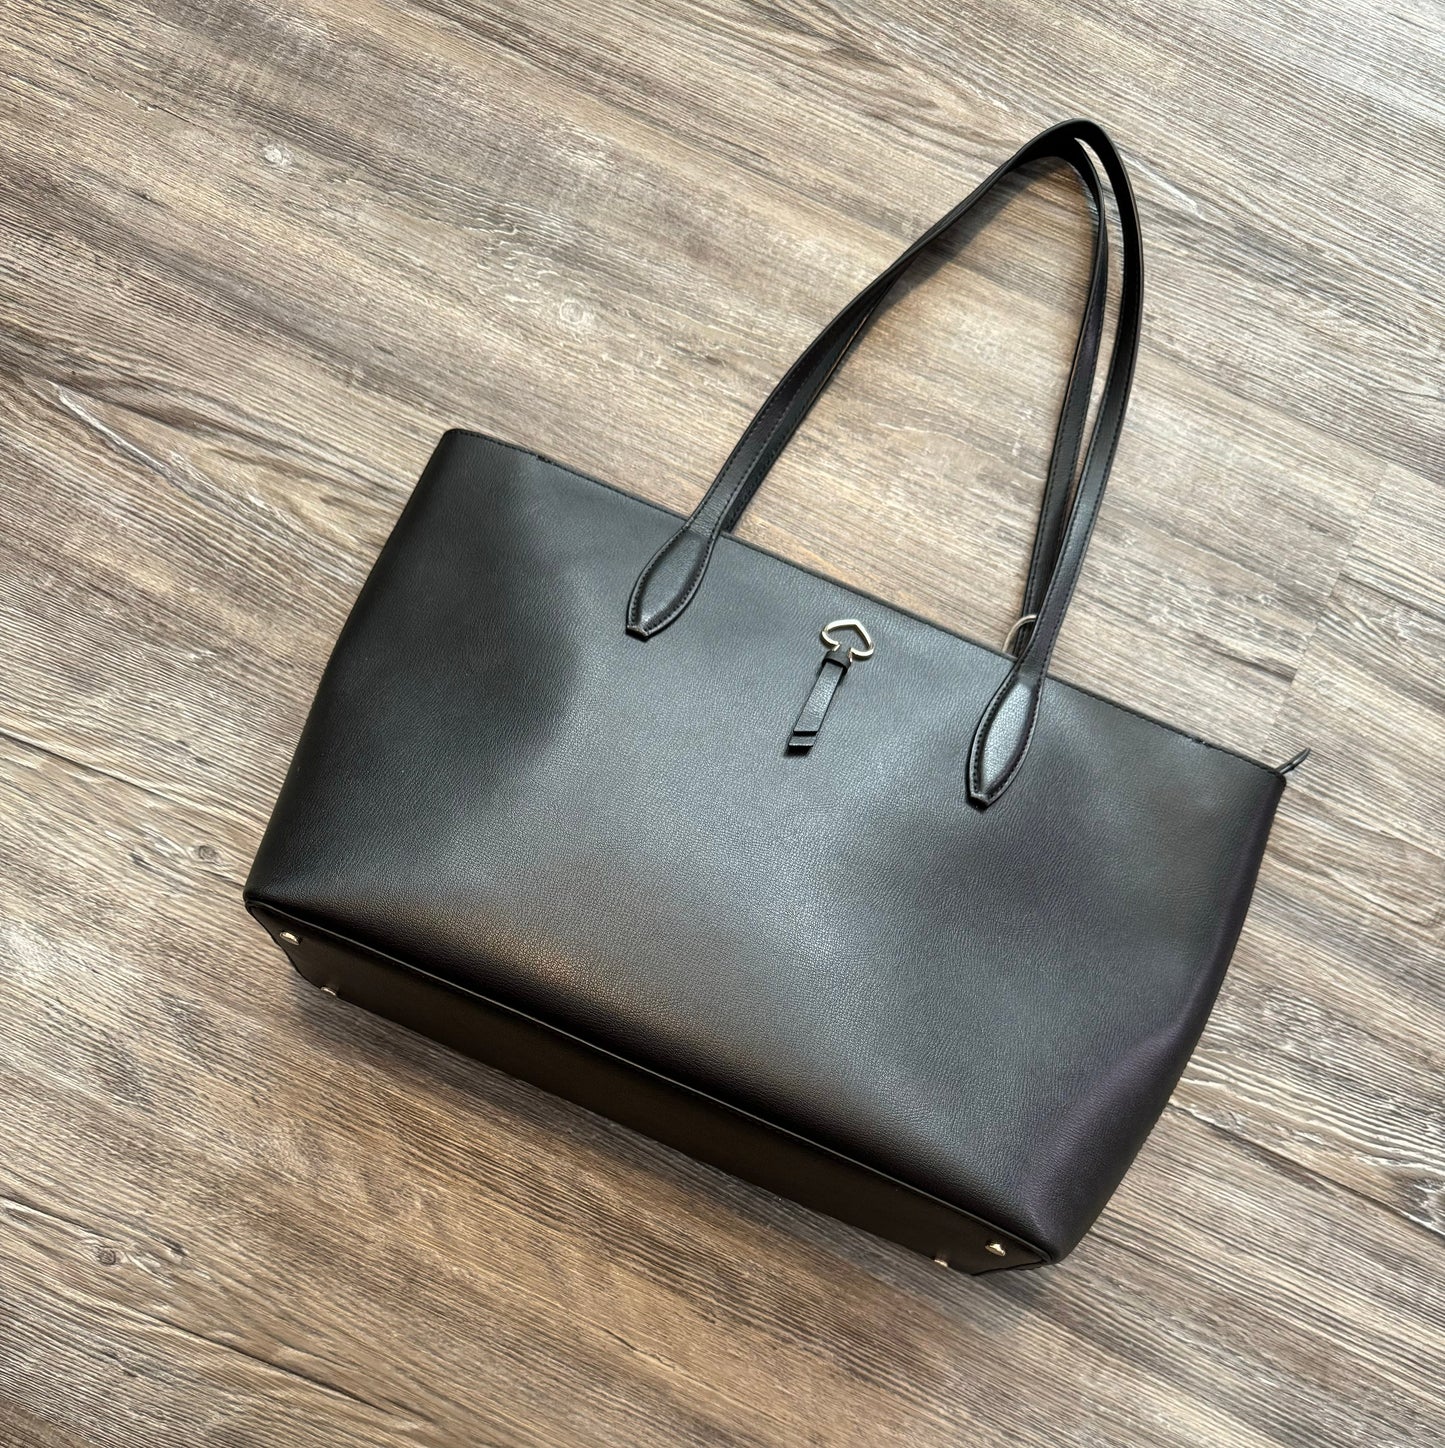 Handbag By Kate Spade  Size: Large